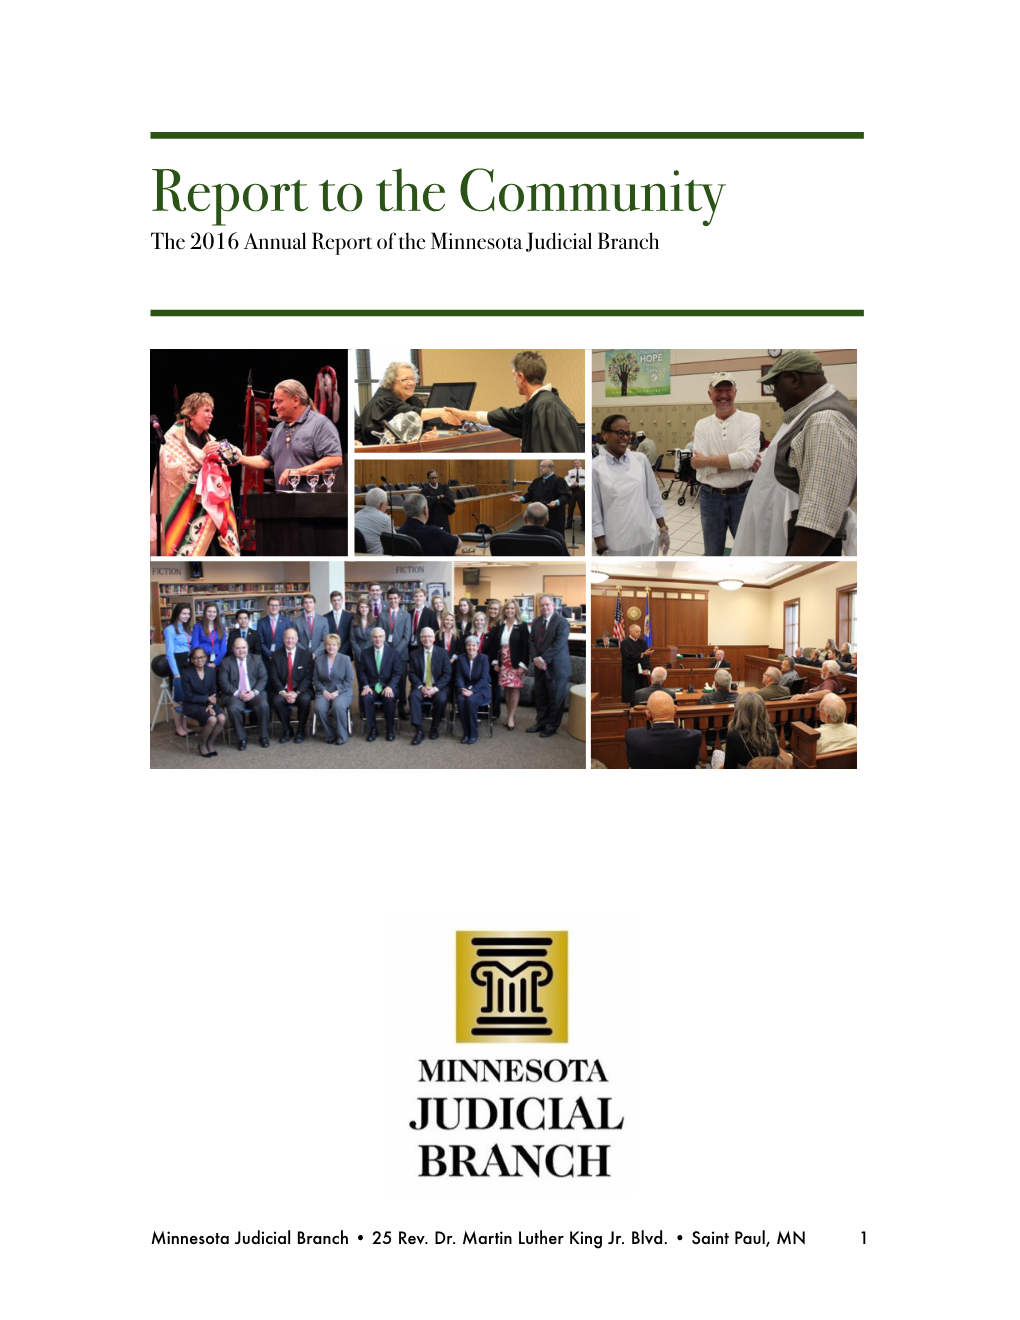 2016 Judicial Branch Annual Report